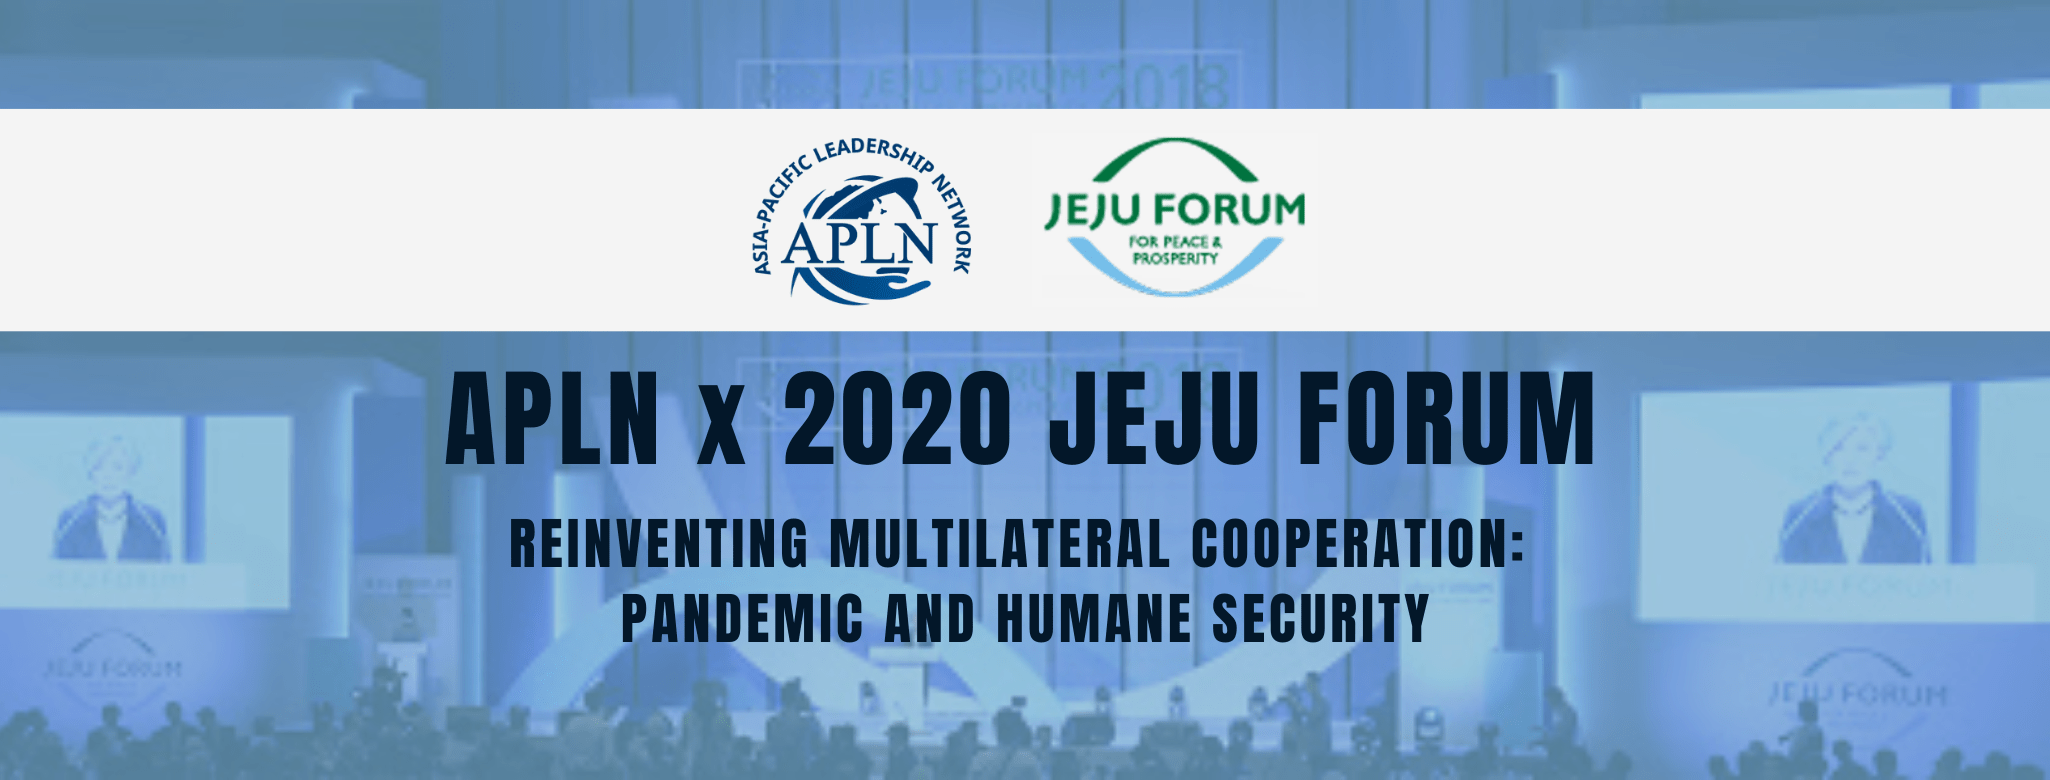 APLN at Jeju Forum 2020: Reinventing Multilateral Cooperation